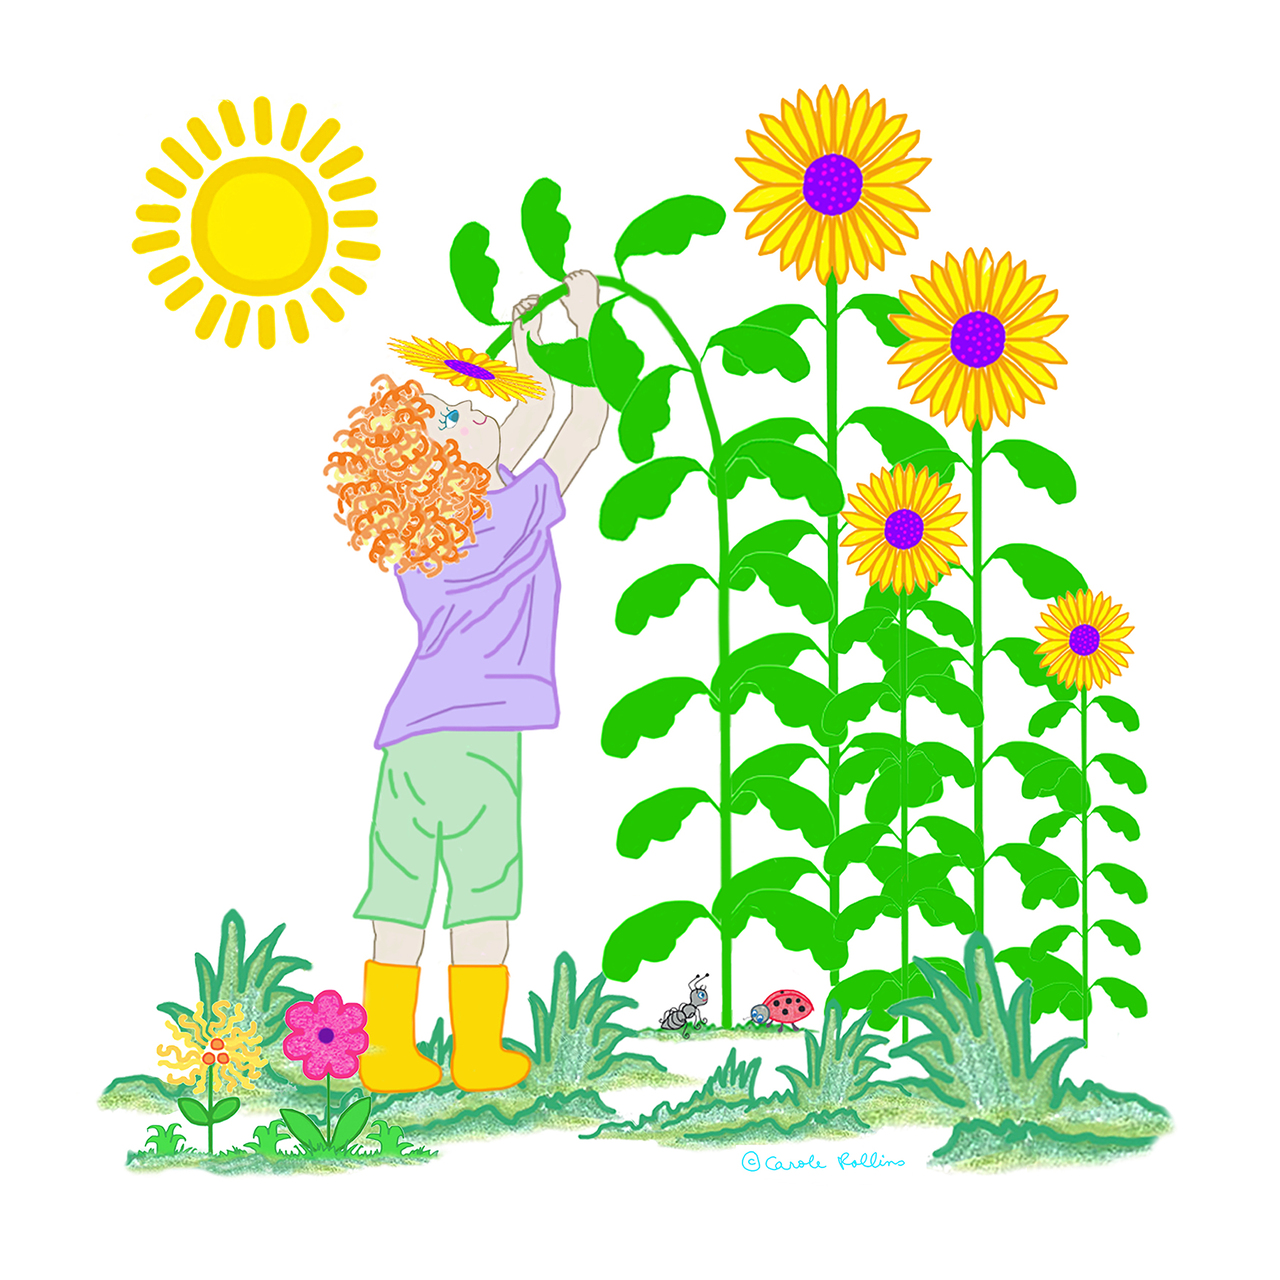 "Sunflower" Design